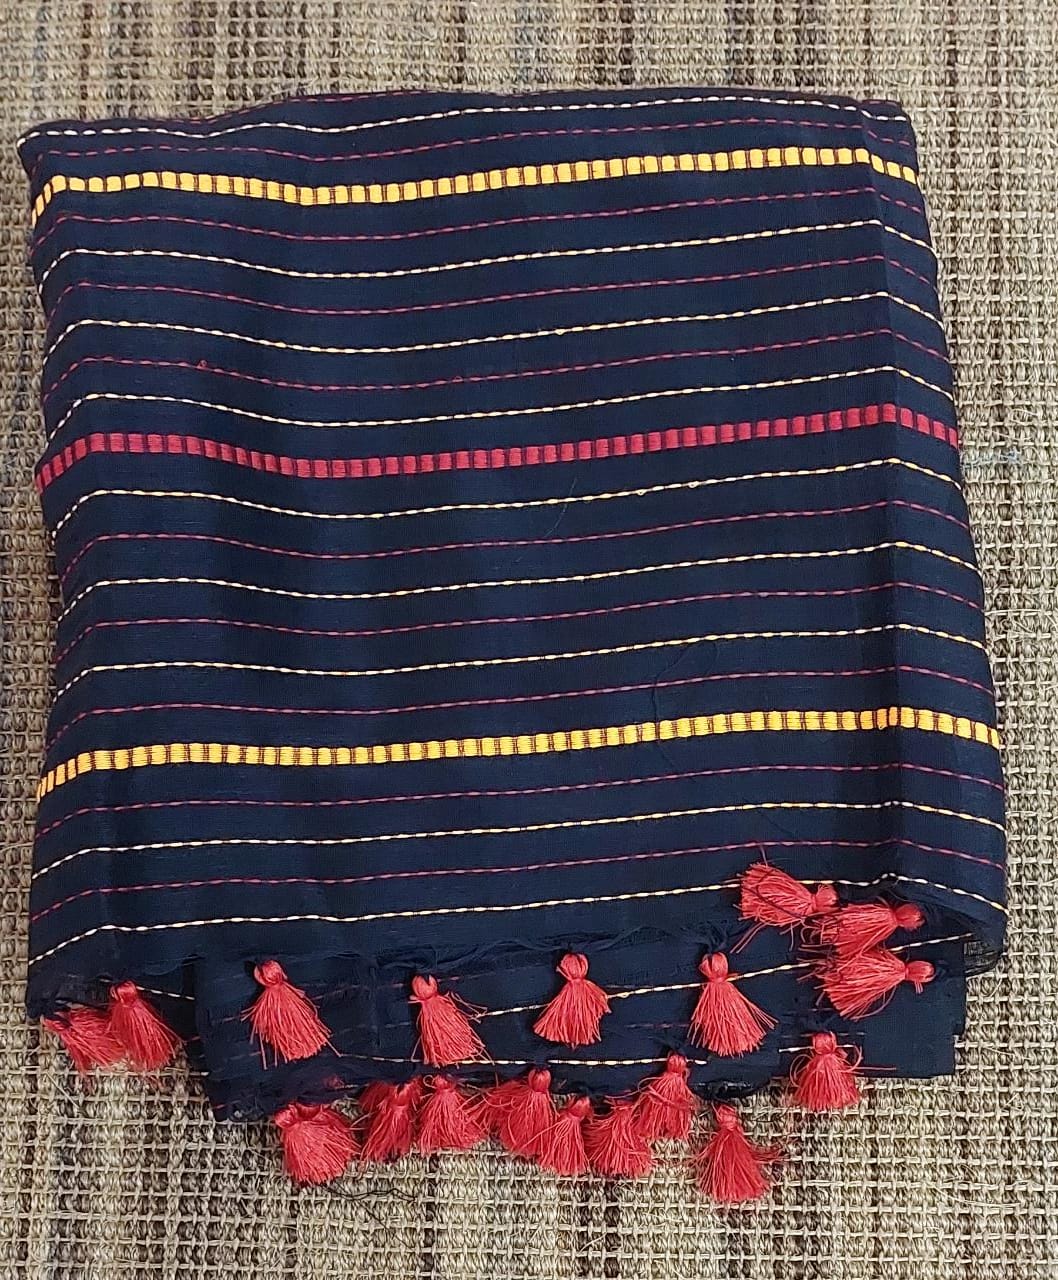 Black Organic Linen Saree with Traditional Katha Work.